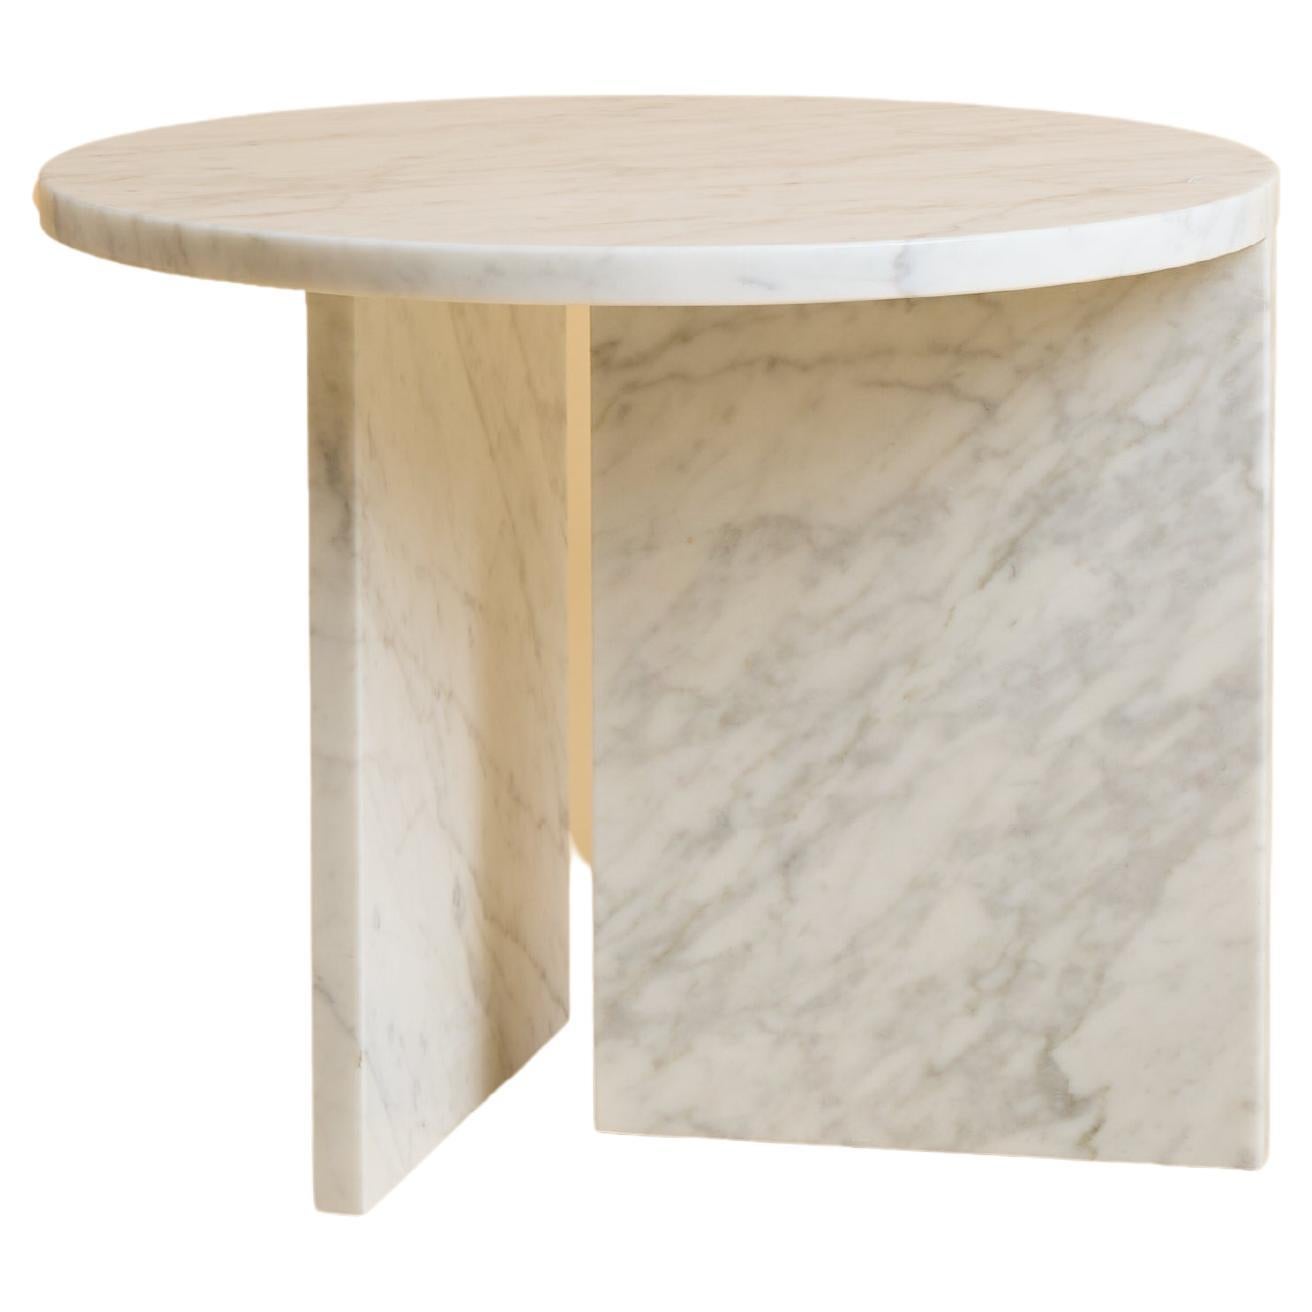 Carrara Marble Circular Side Table, Made in Italy